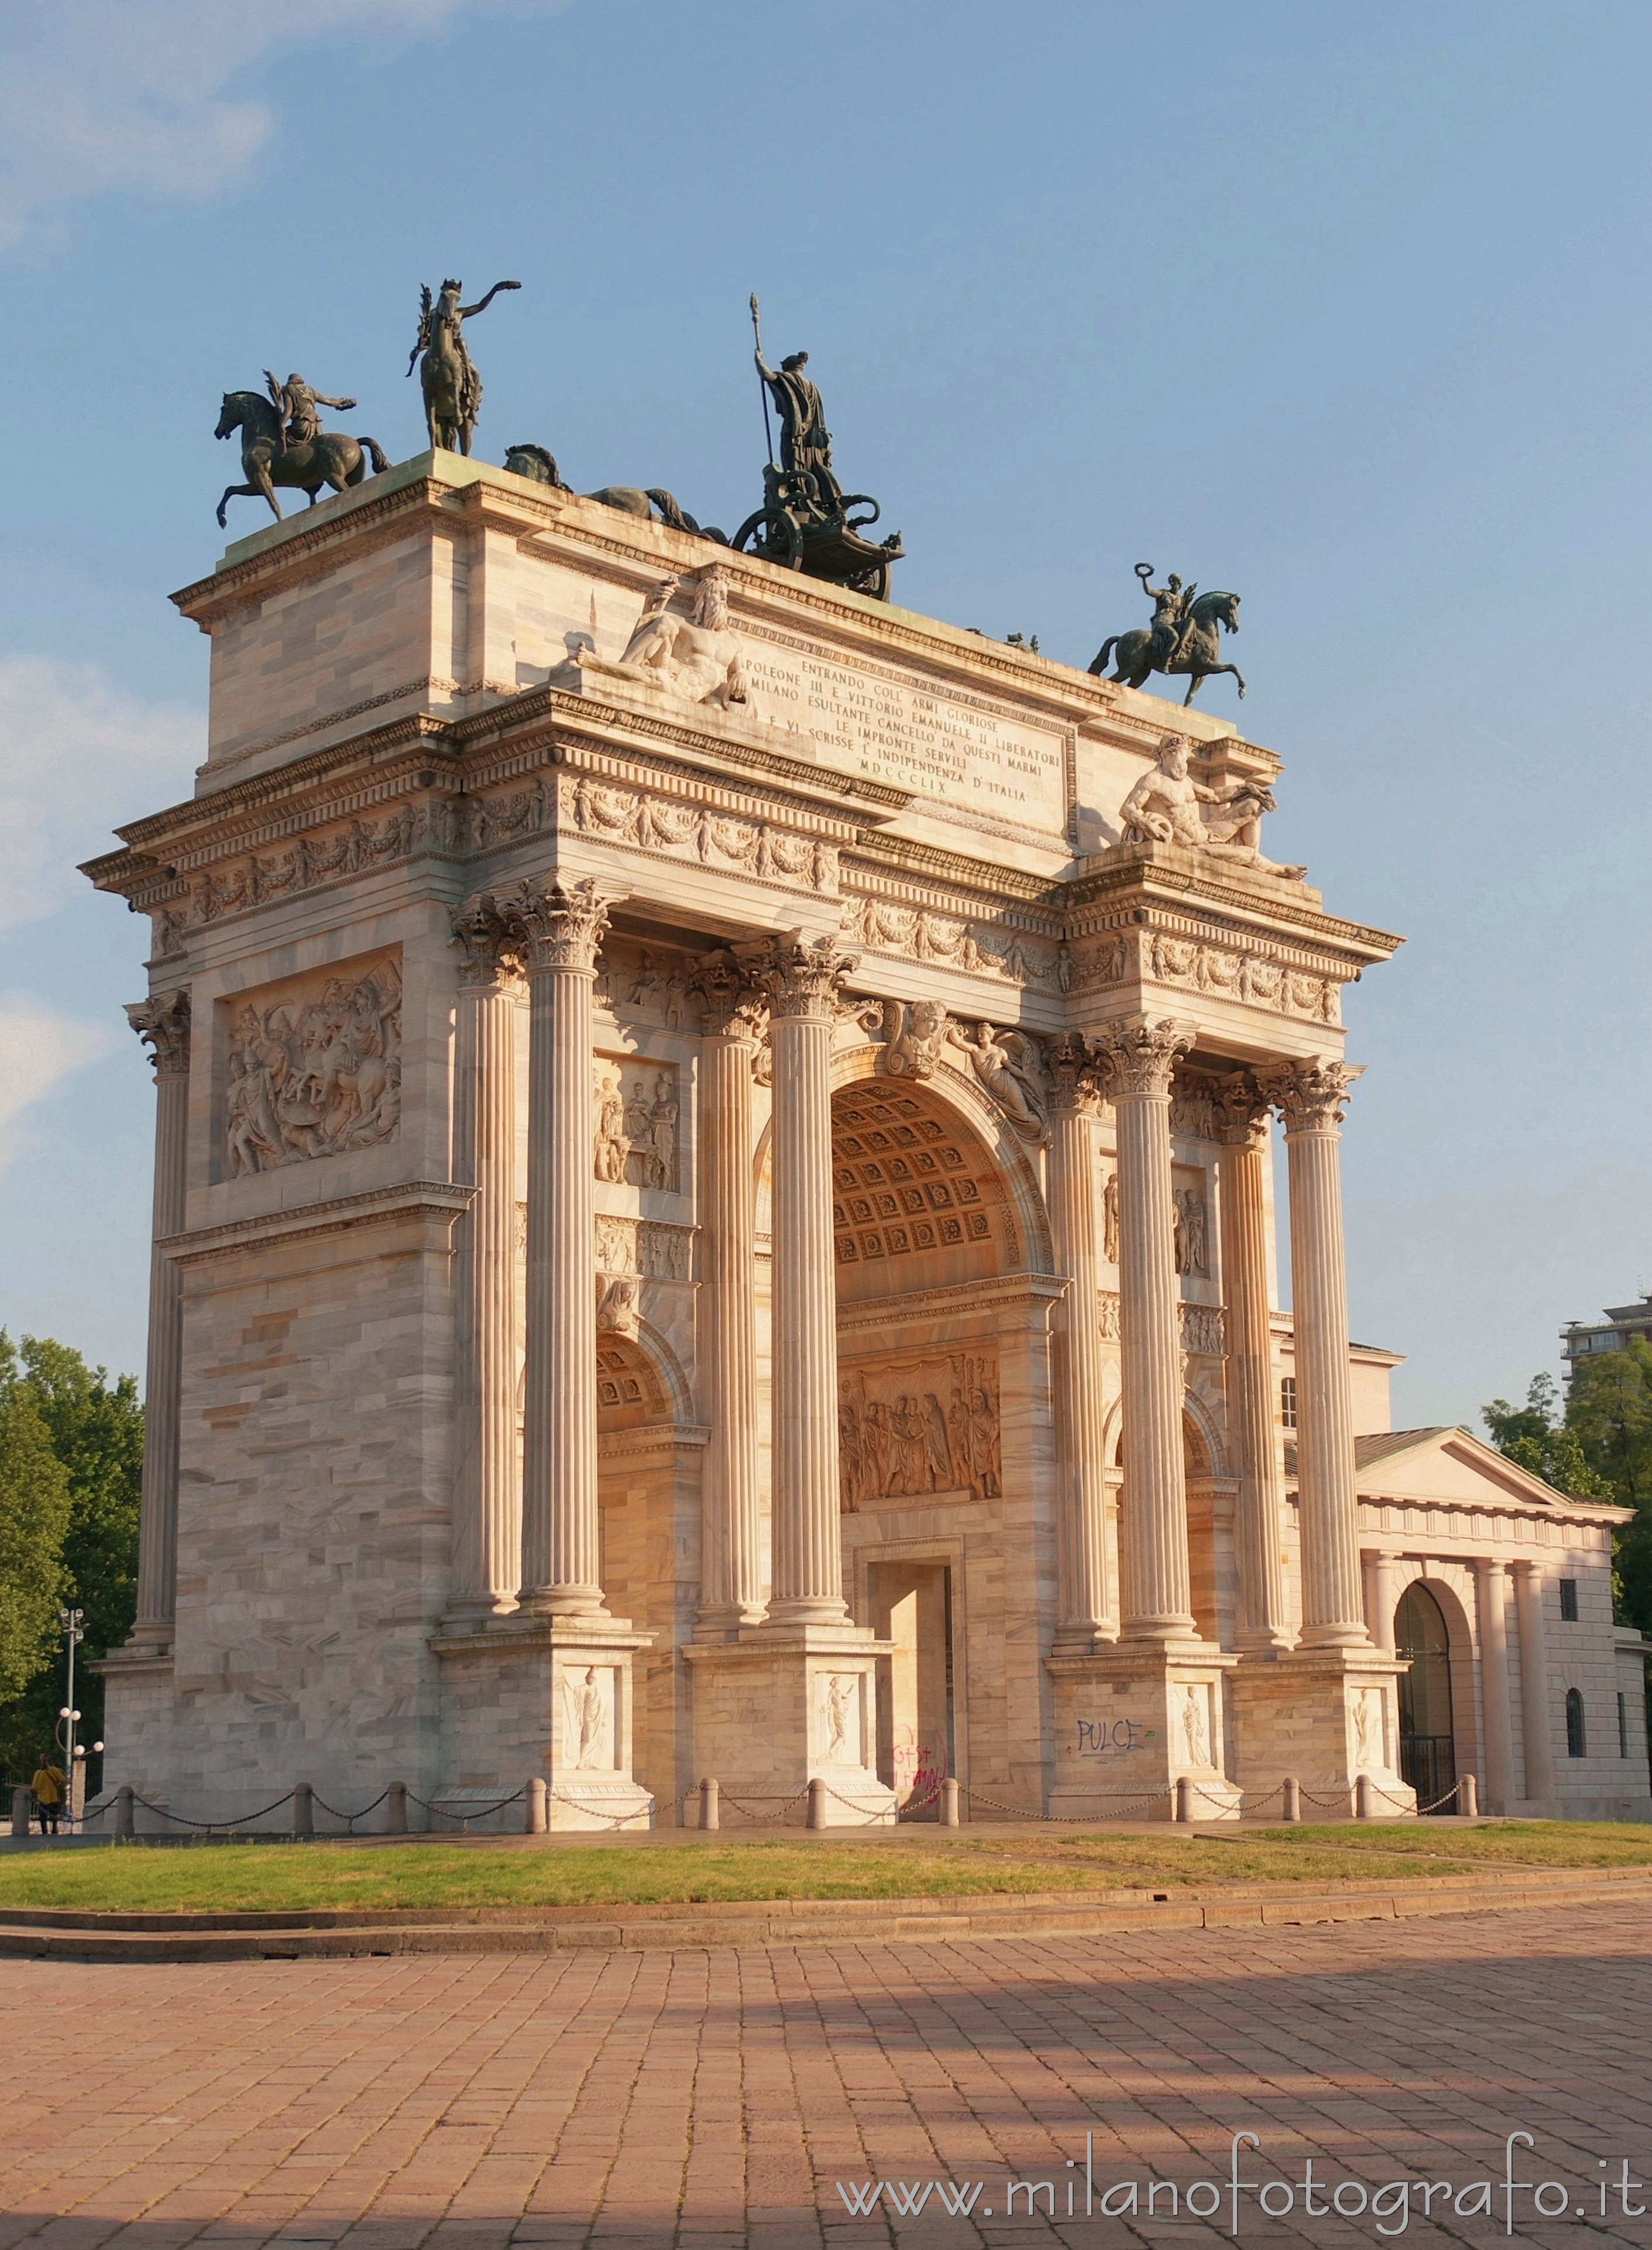 Milan (Italy): Arch of Peace - Milan (Italy)